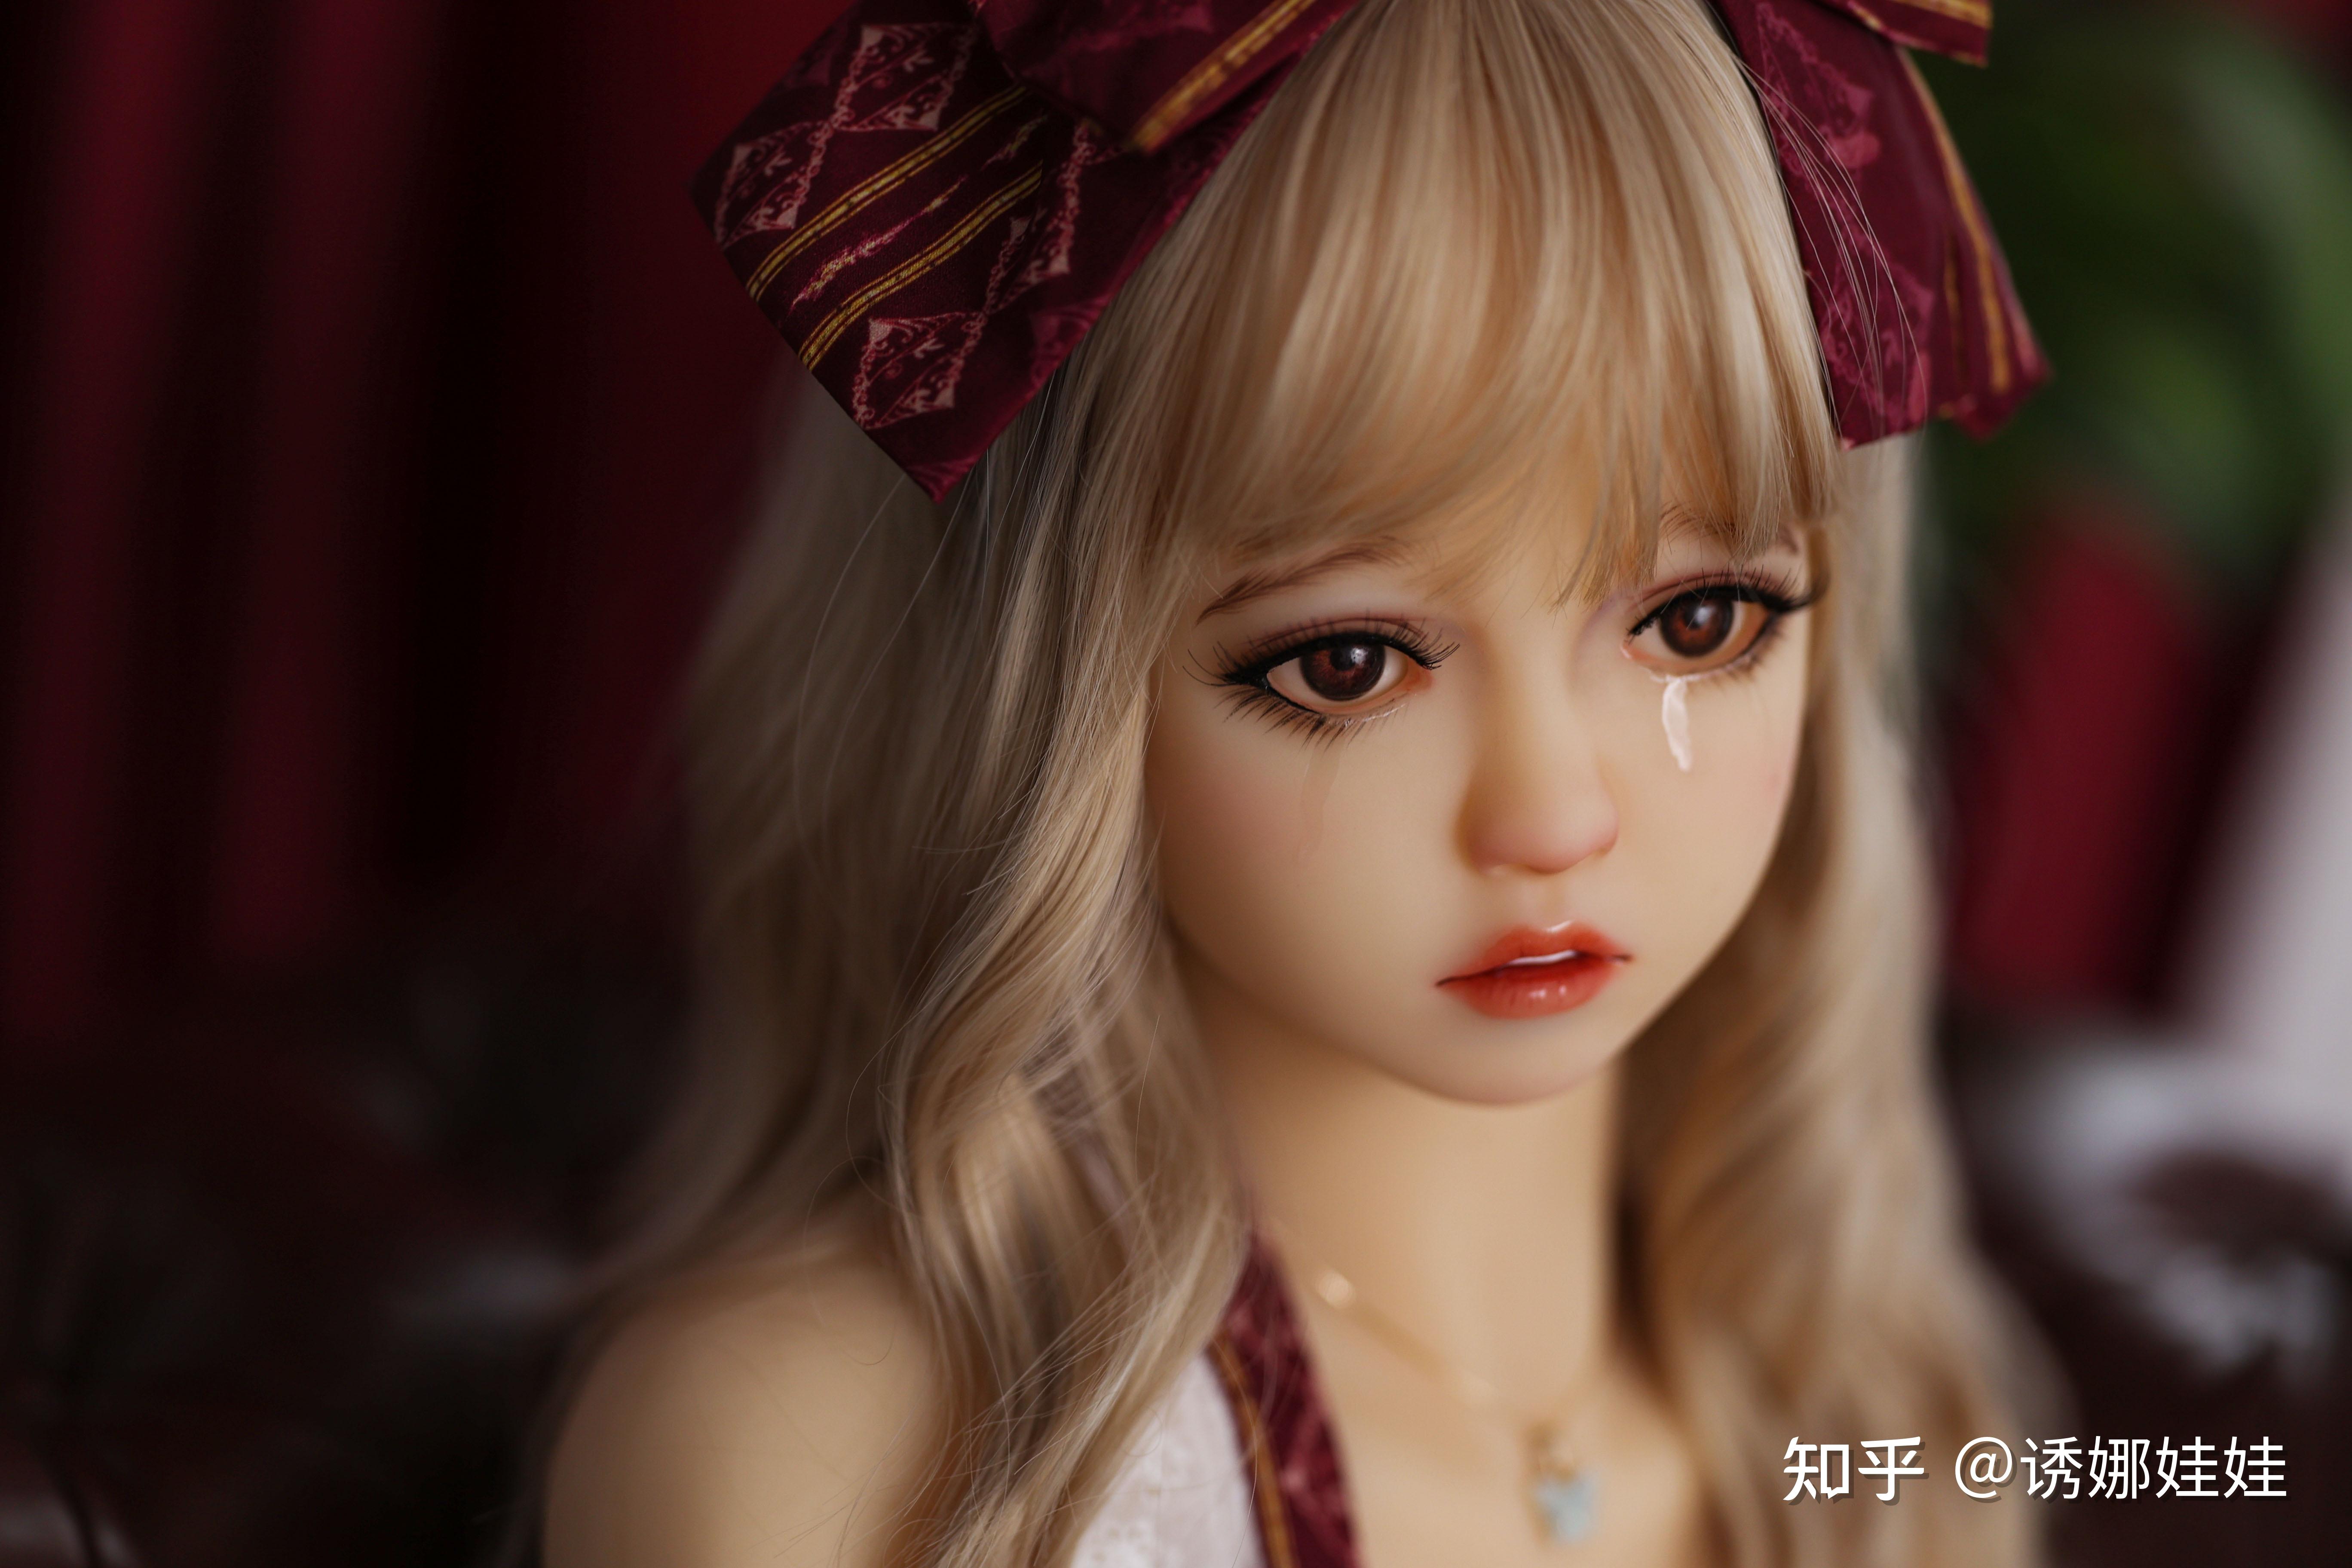 serdoll工厂店实体娃娃硅胶娃成人人偶可插入实体带骨架二次元萝-Taobao